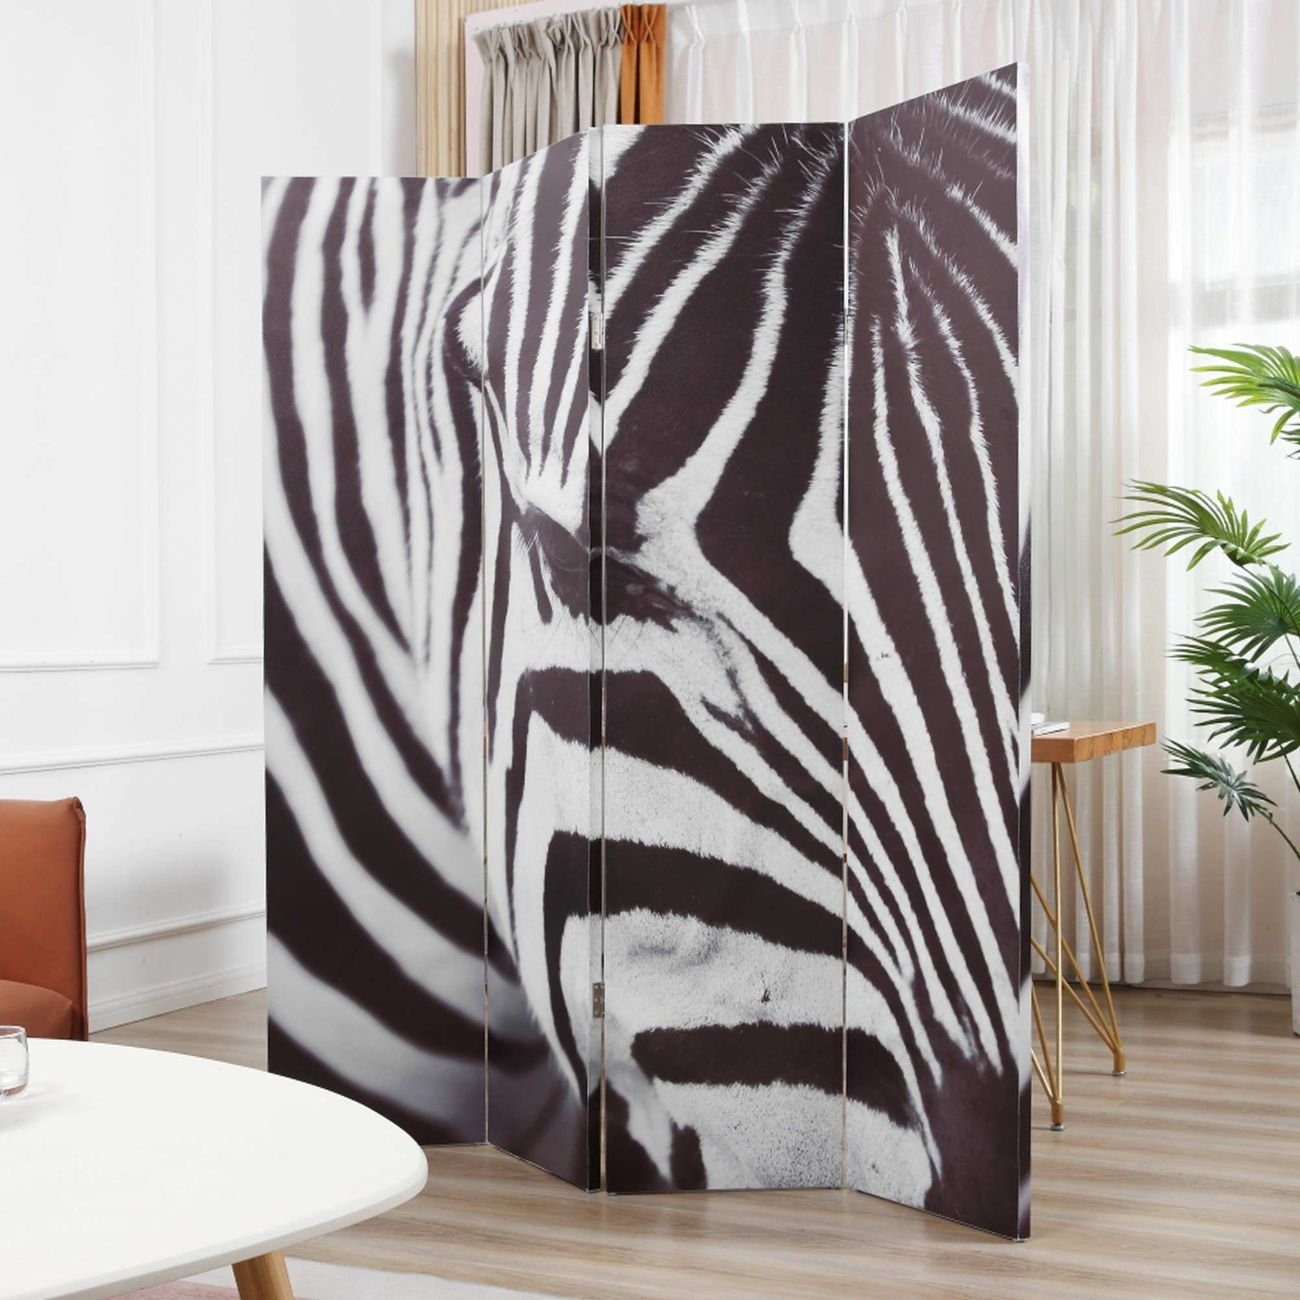 Makika Paravent Trennwand / Raumteiler Faltbar - Zebra